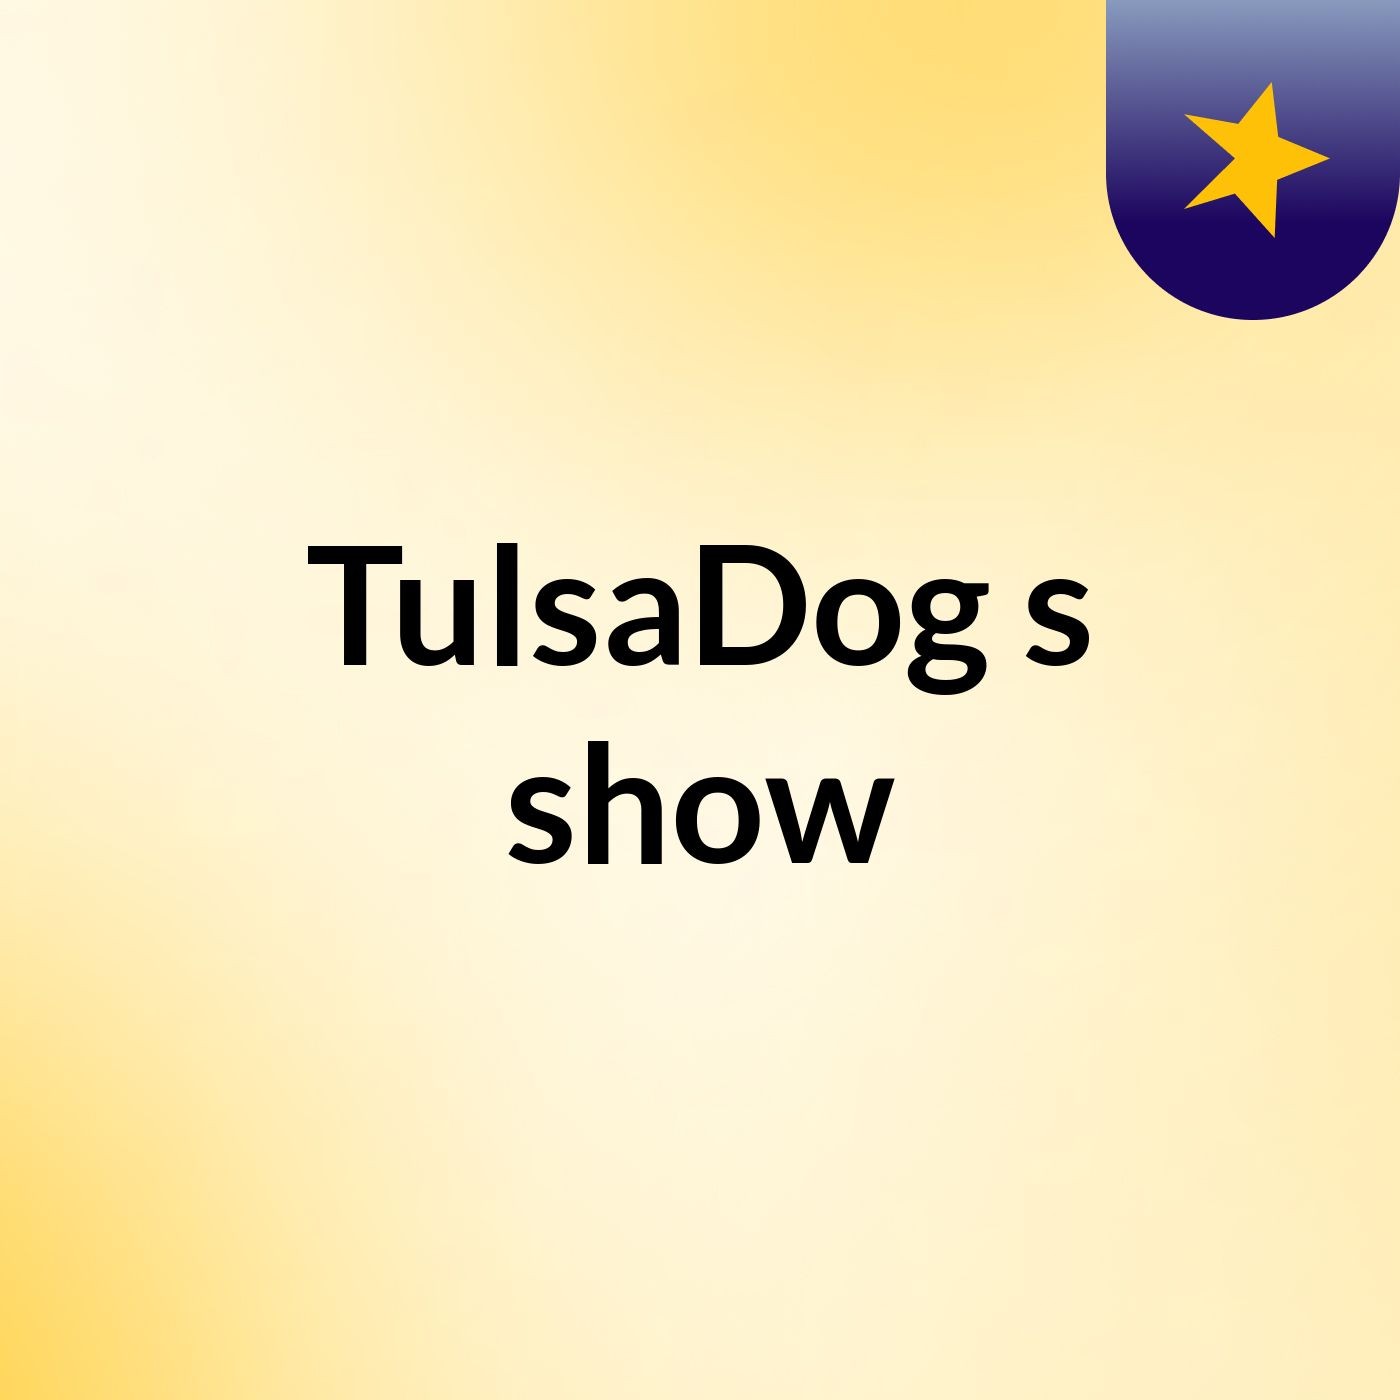 TulsaDog's show